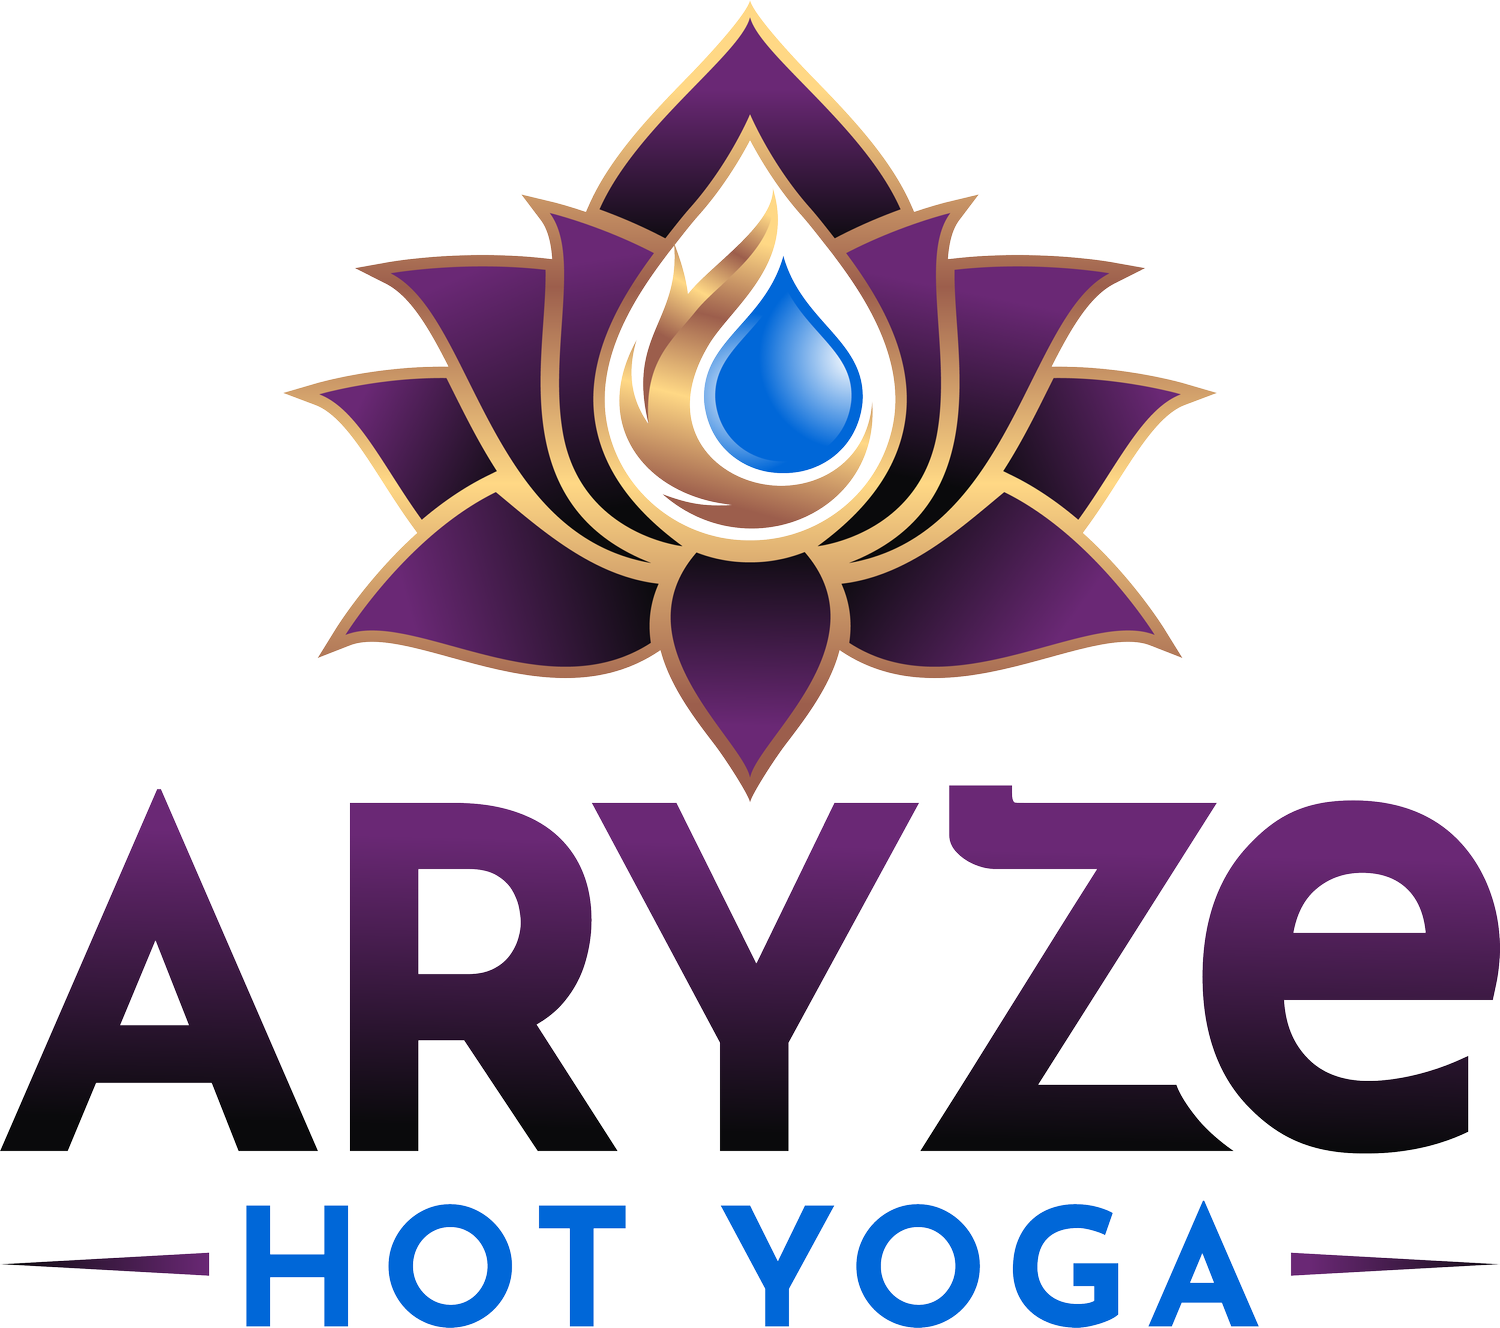 Aryze Hot Yoga